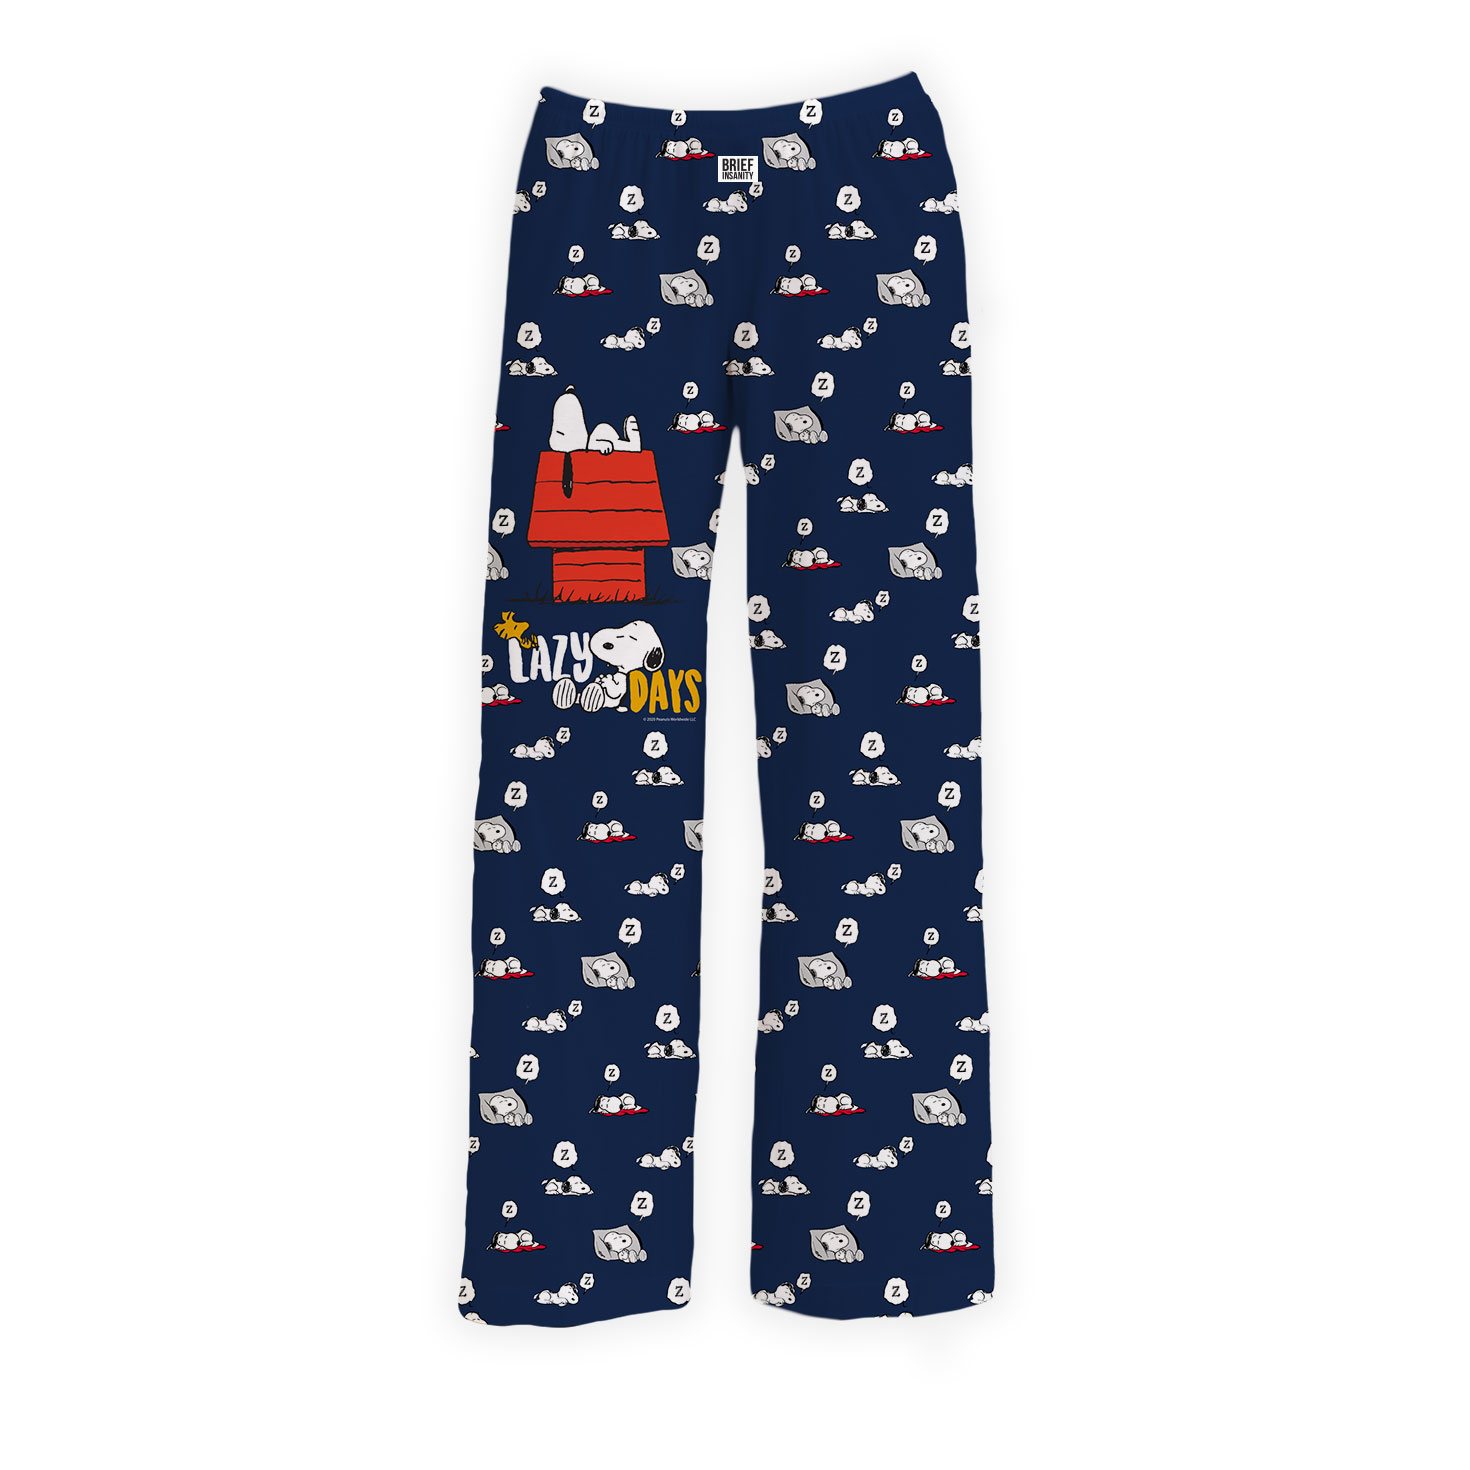 Peanuts Snoopy Lazy Days Lounge Pants, Small - Loungewear | Hallmark